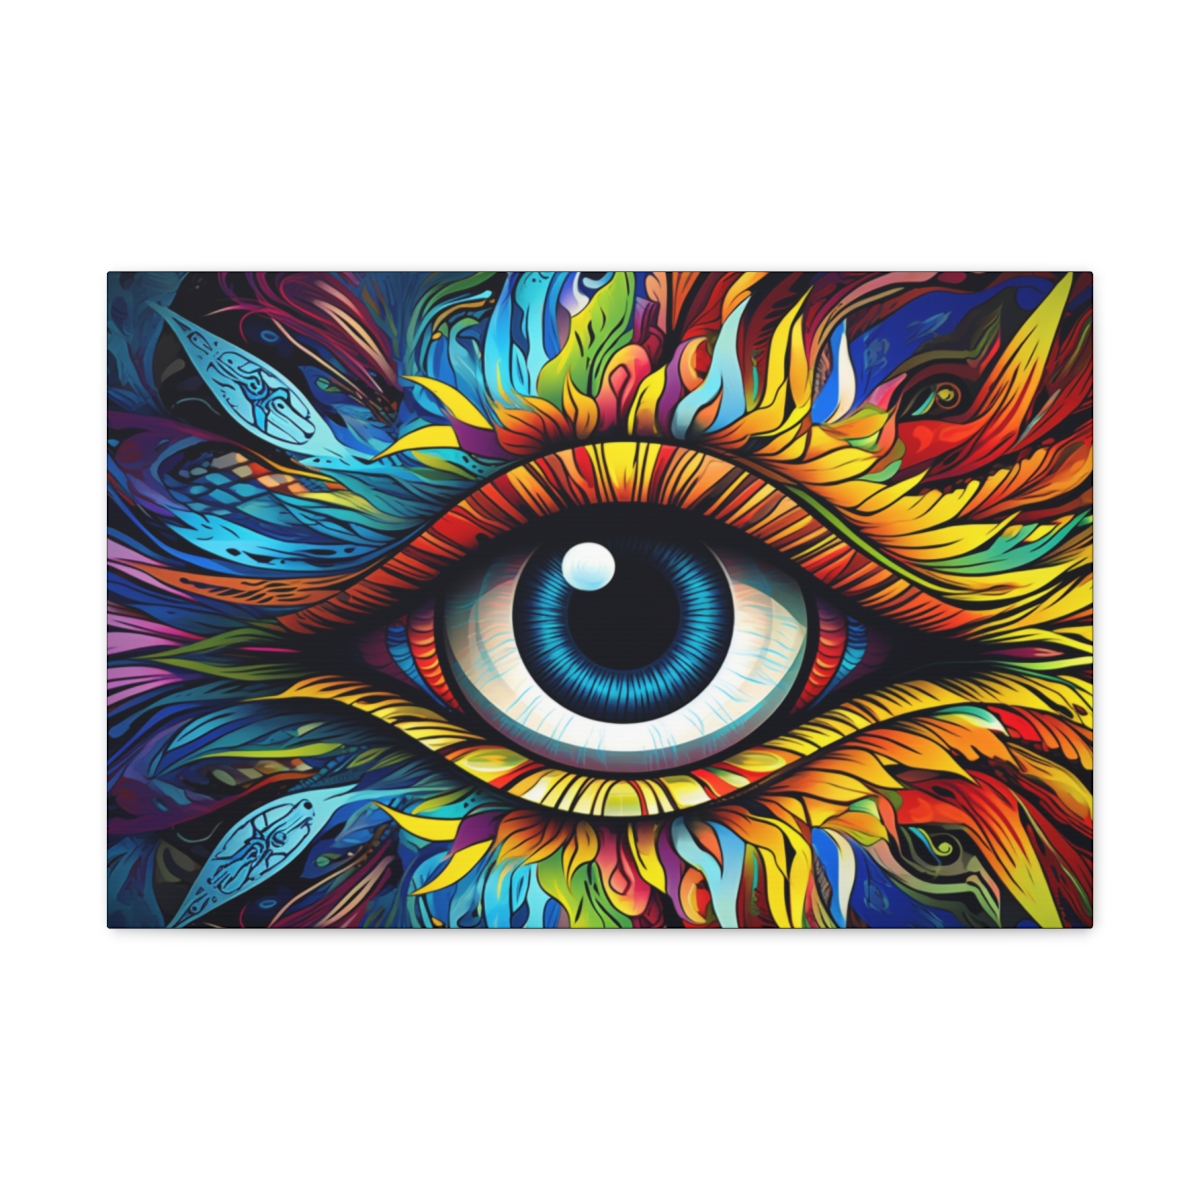 Trippy Psychedelic Wall Art For Hippie: The Eye Of Cosmic Wisdom